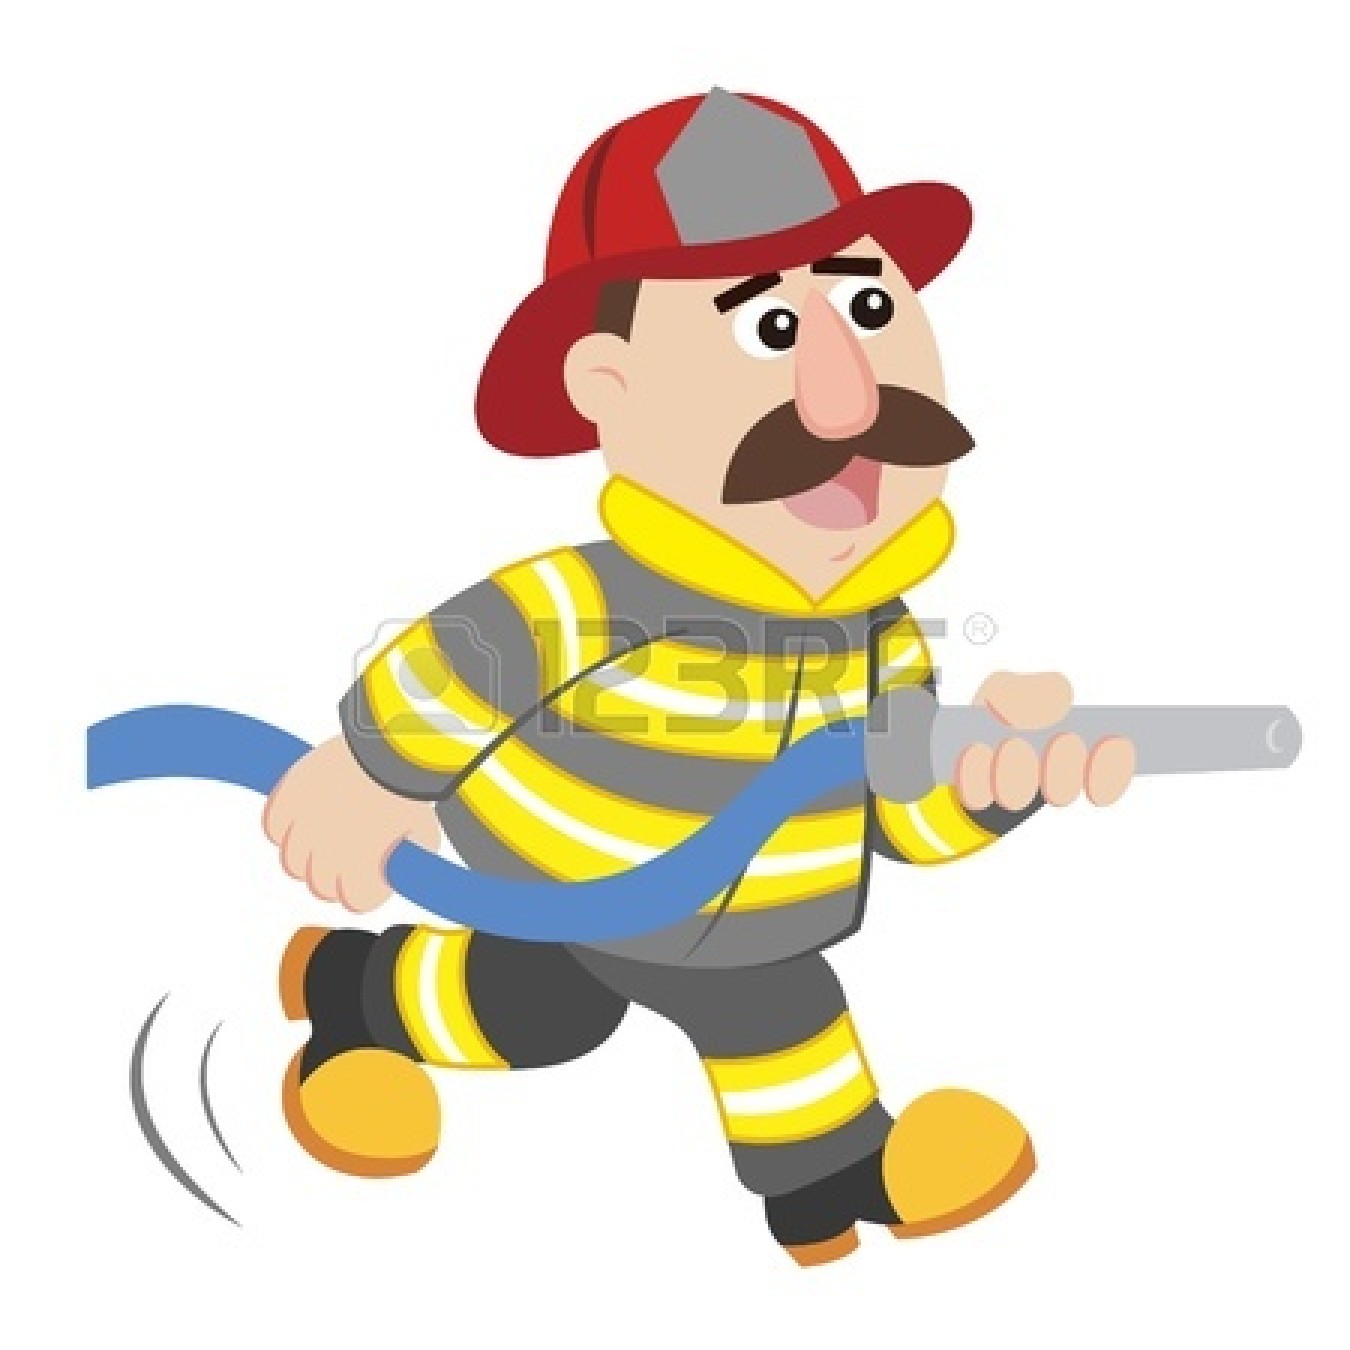 Cartoon Firefighter   Clipart Panda   Free Clipart Images